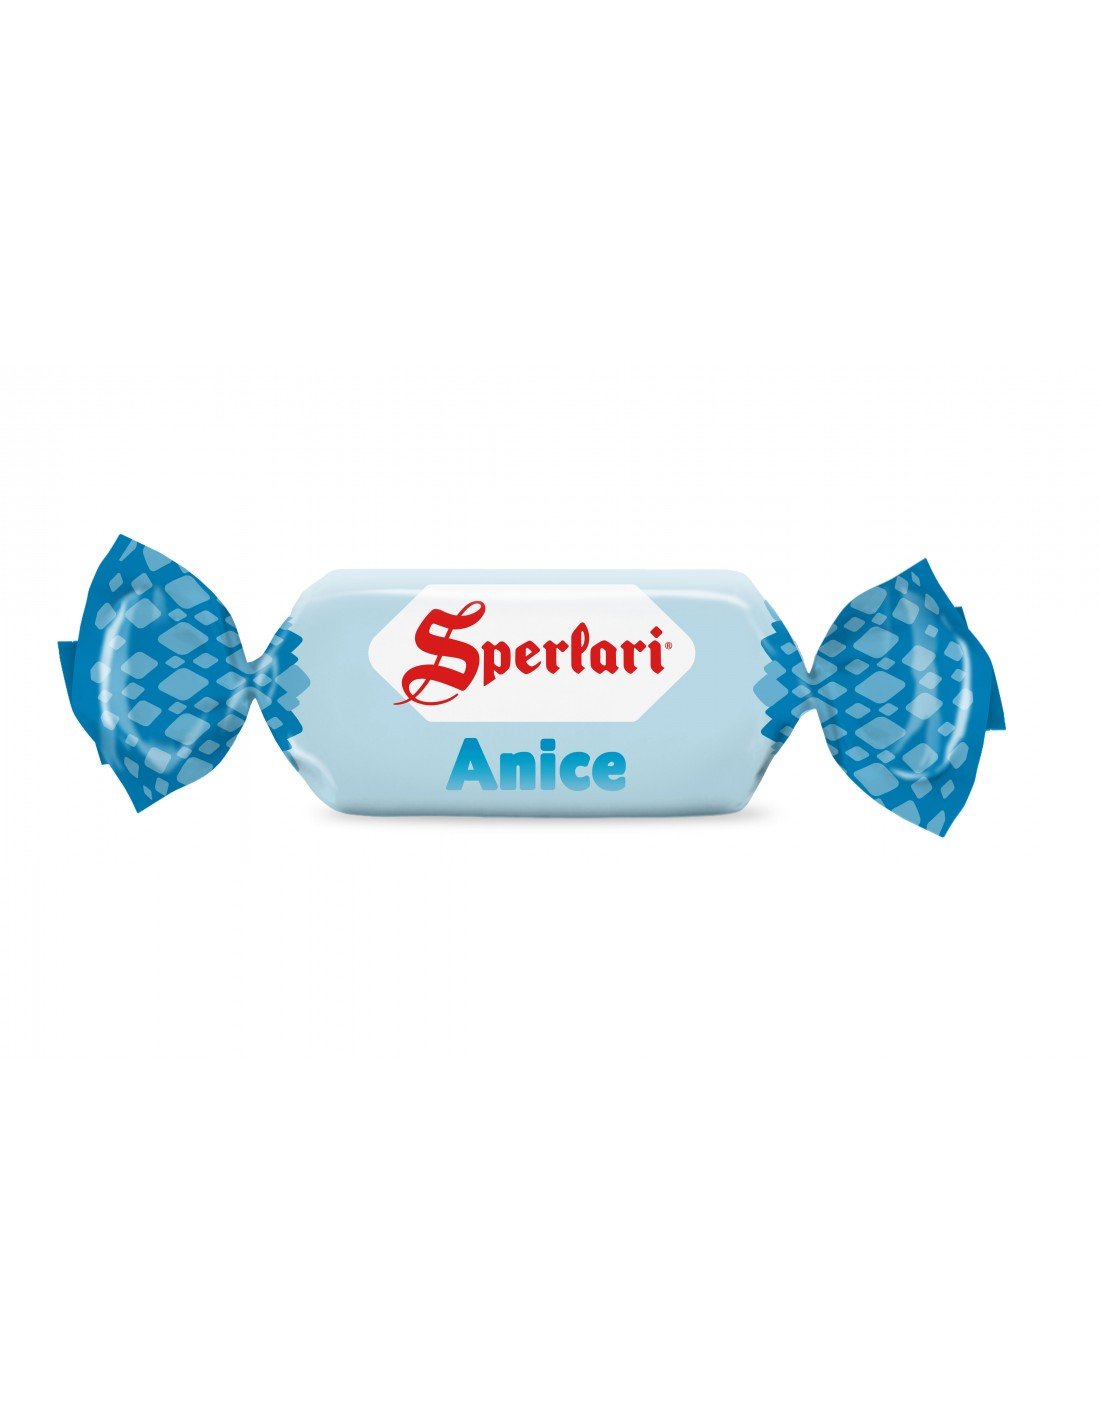 Sperlari Anise Hard Candies - Torrone Candy